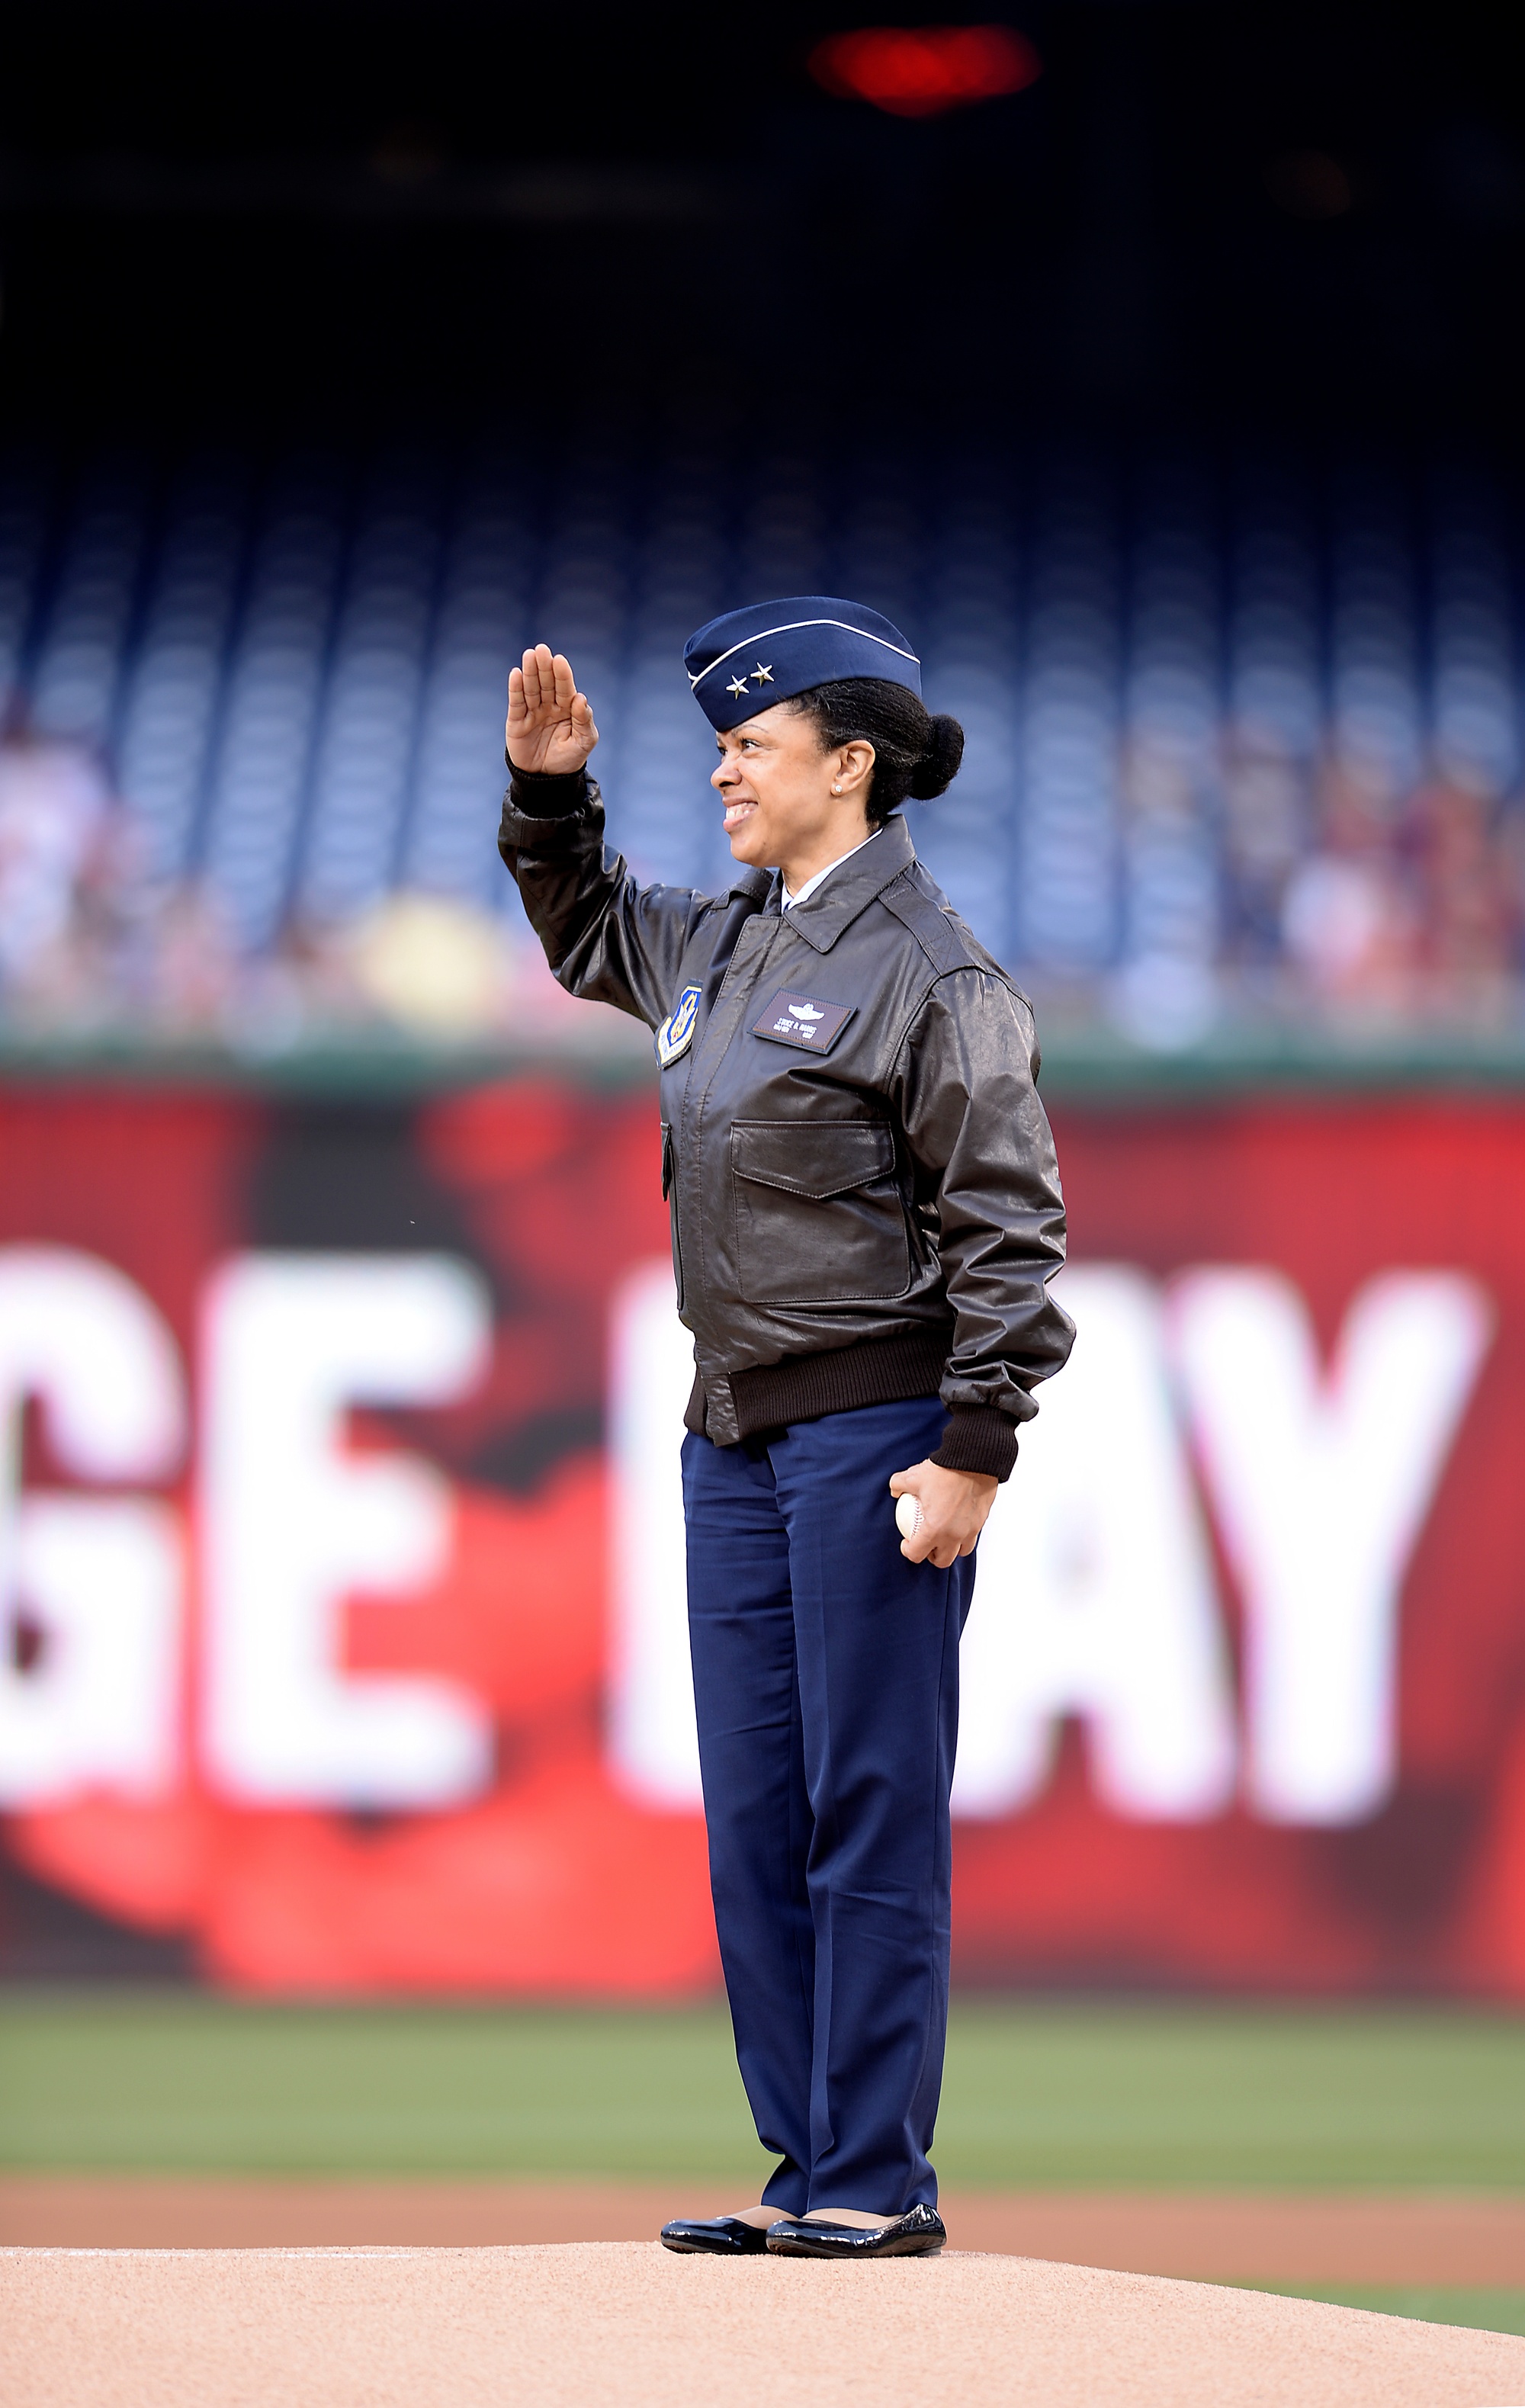 DVIDS - Images - Army honored at Washington Nationals MLB game